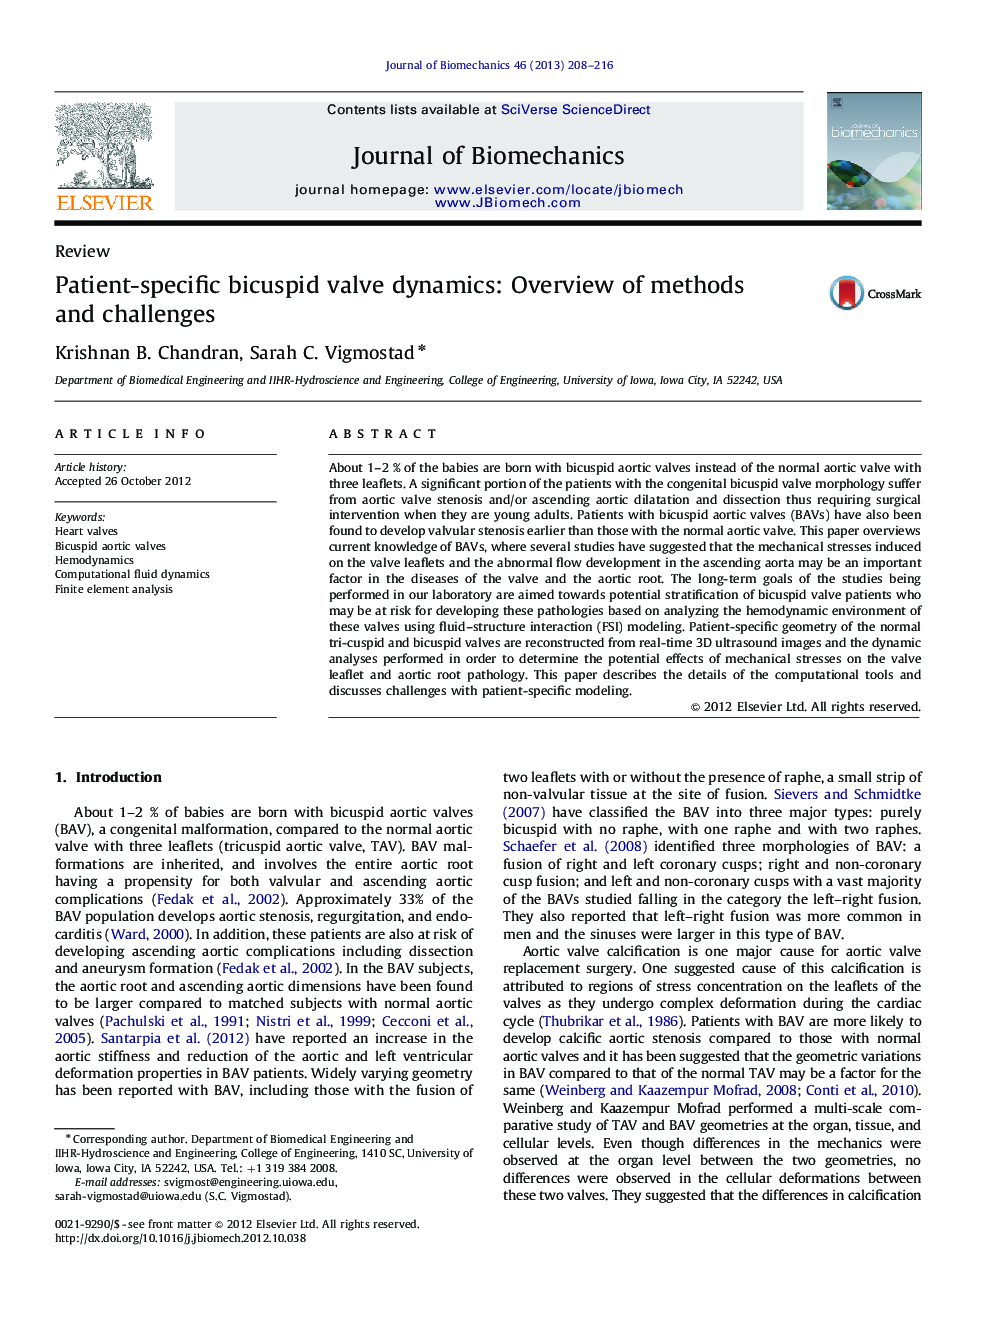 Patient-specific bicuspid valve dynamics: Overview of methods and challenges